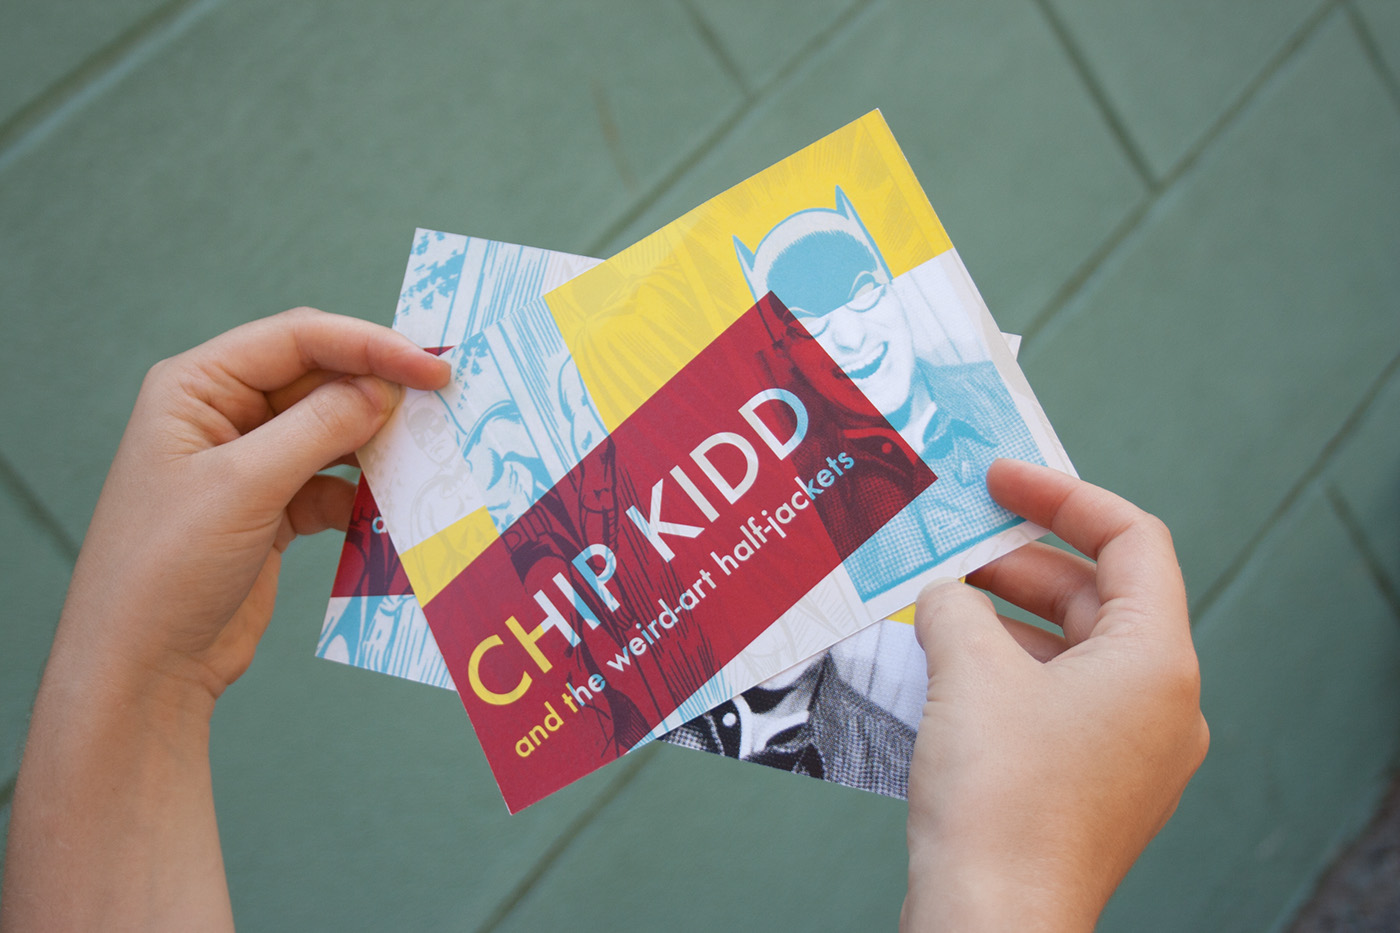 chip kidd catalog poster postcards Exhibition 